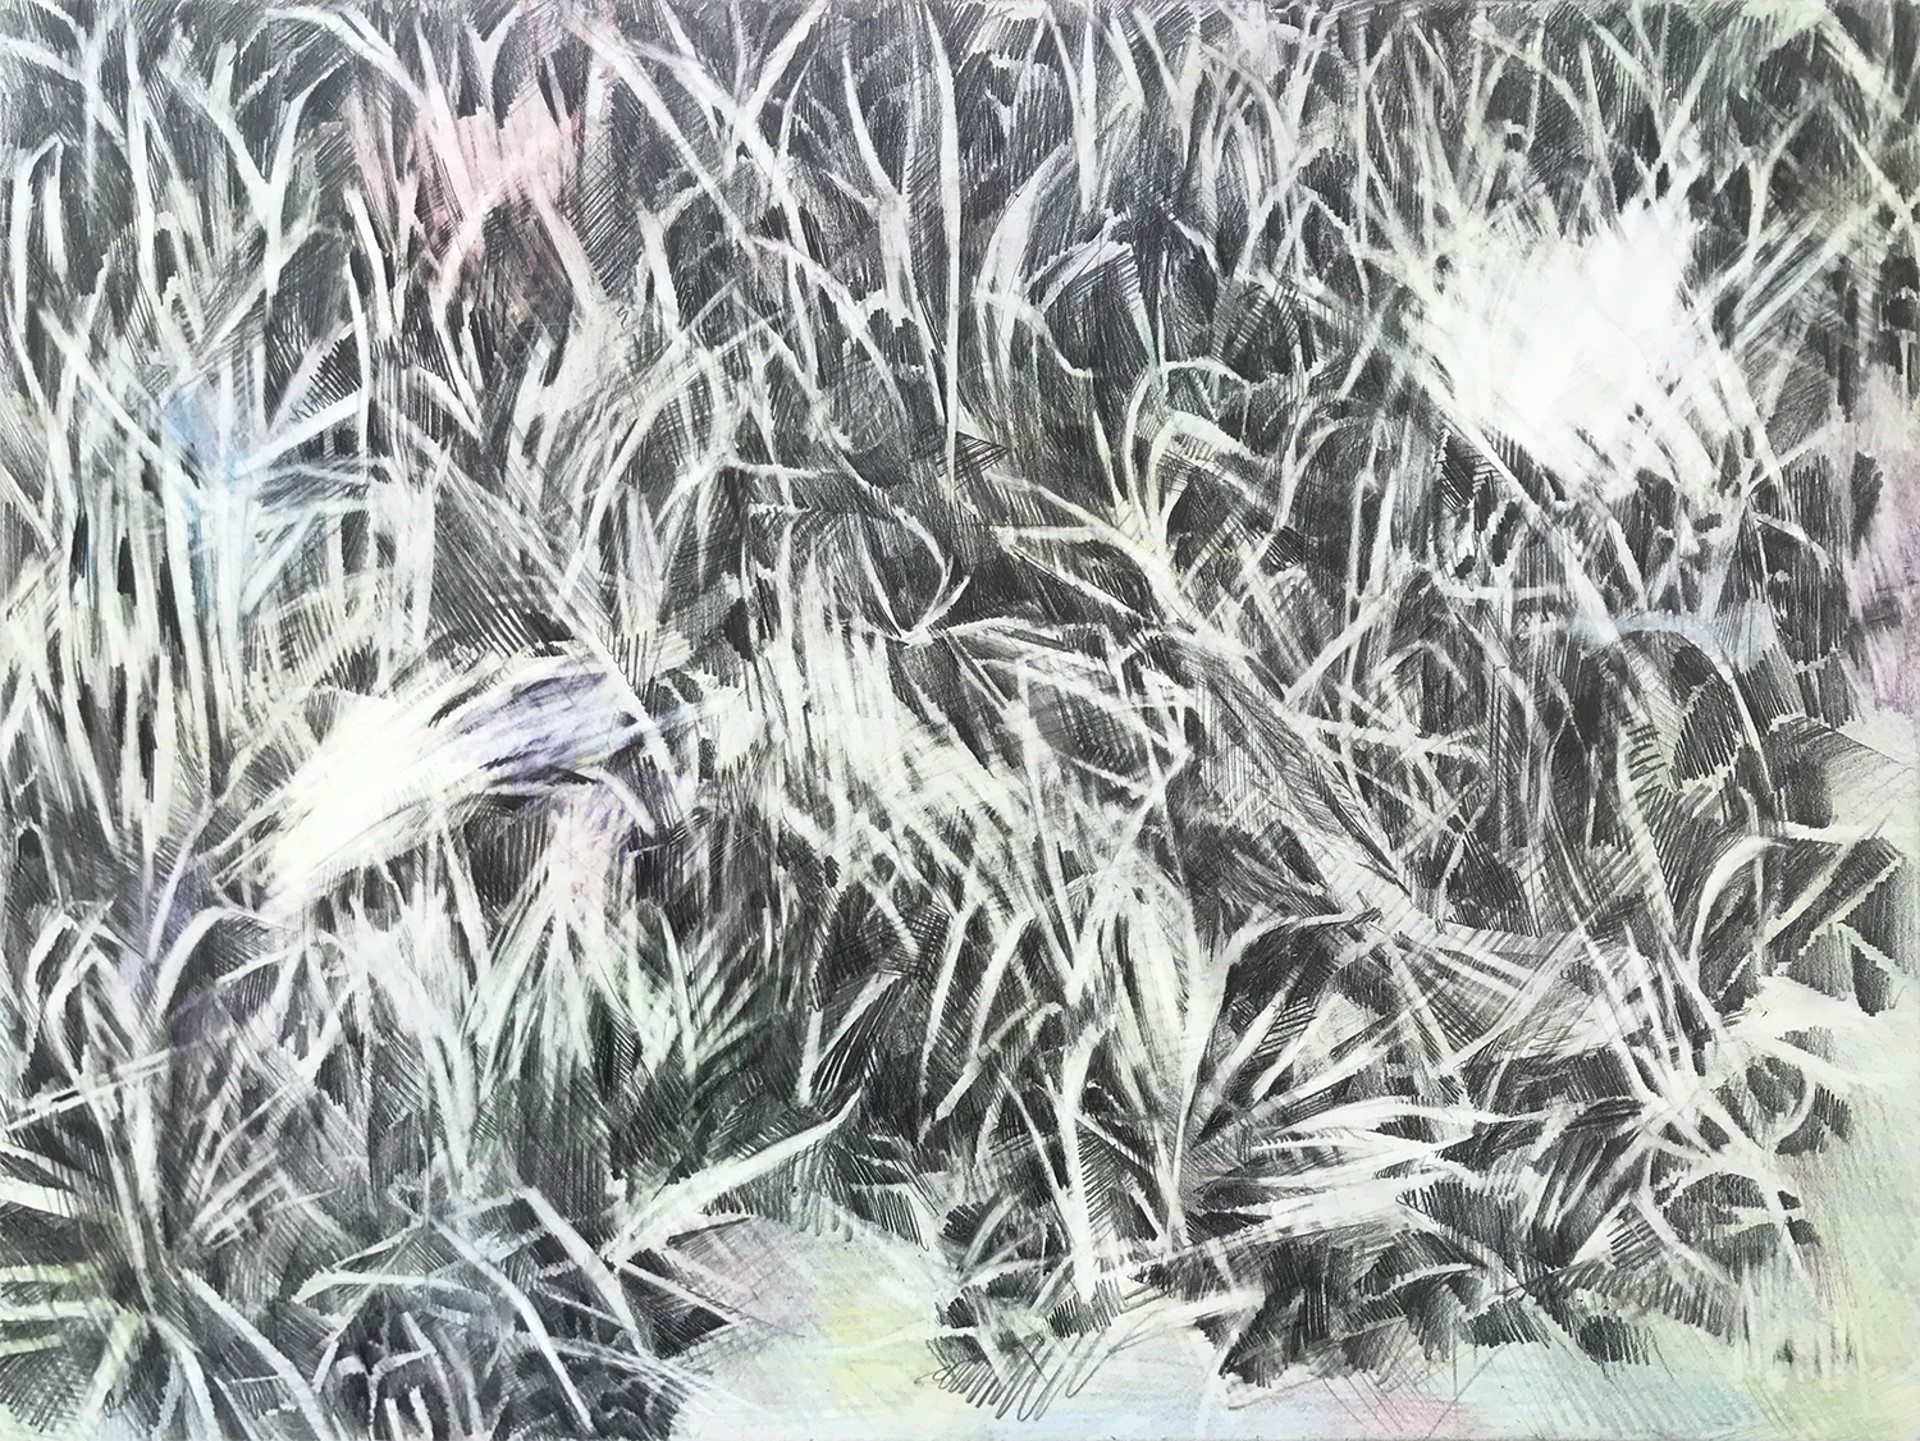 Grass Composition 2 (Alley Grass) by Rachel Wolfson Smith